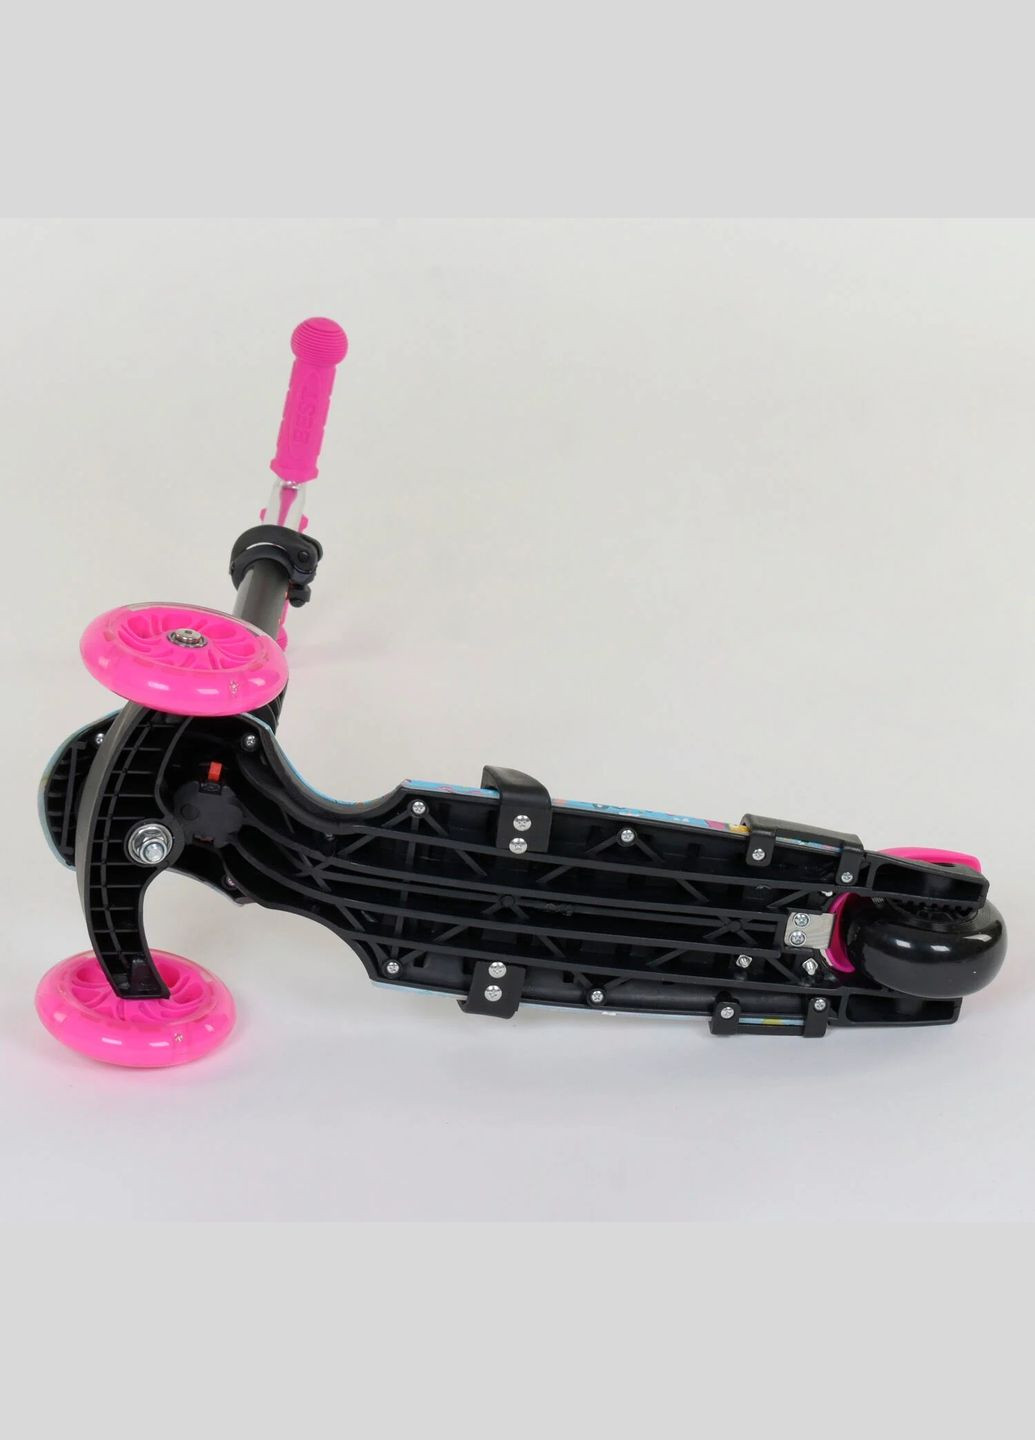 Детский самокат 5 в 1 26901. Абстракция, PU колёса, подсветка в колесах. Розовый Best Scooter (279928554)